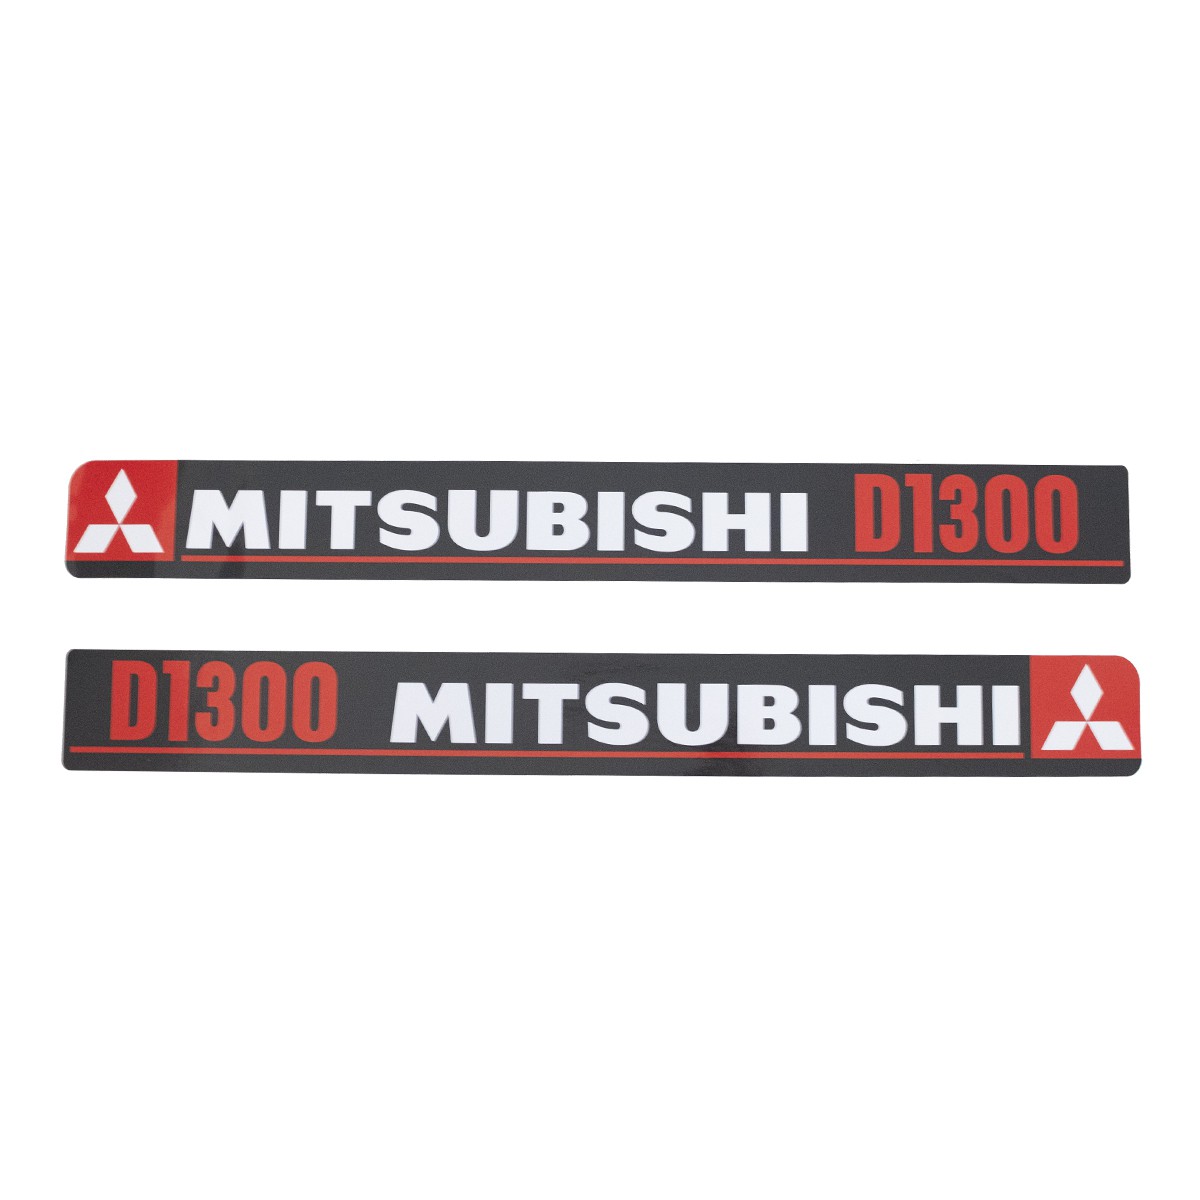 Mitsubishi D1300 Aufkleber